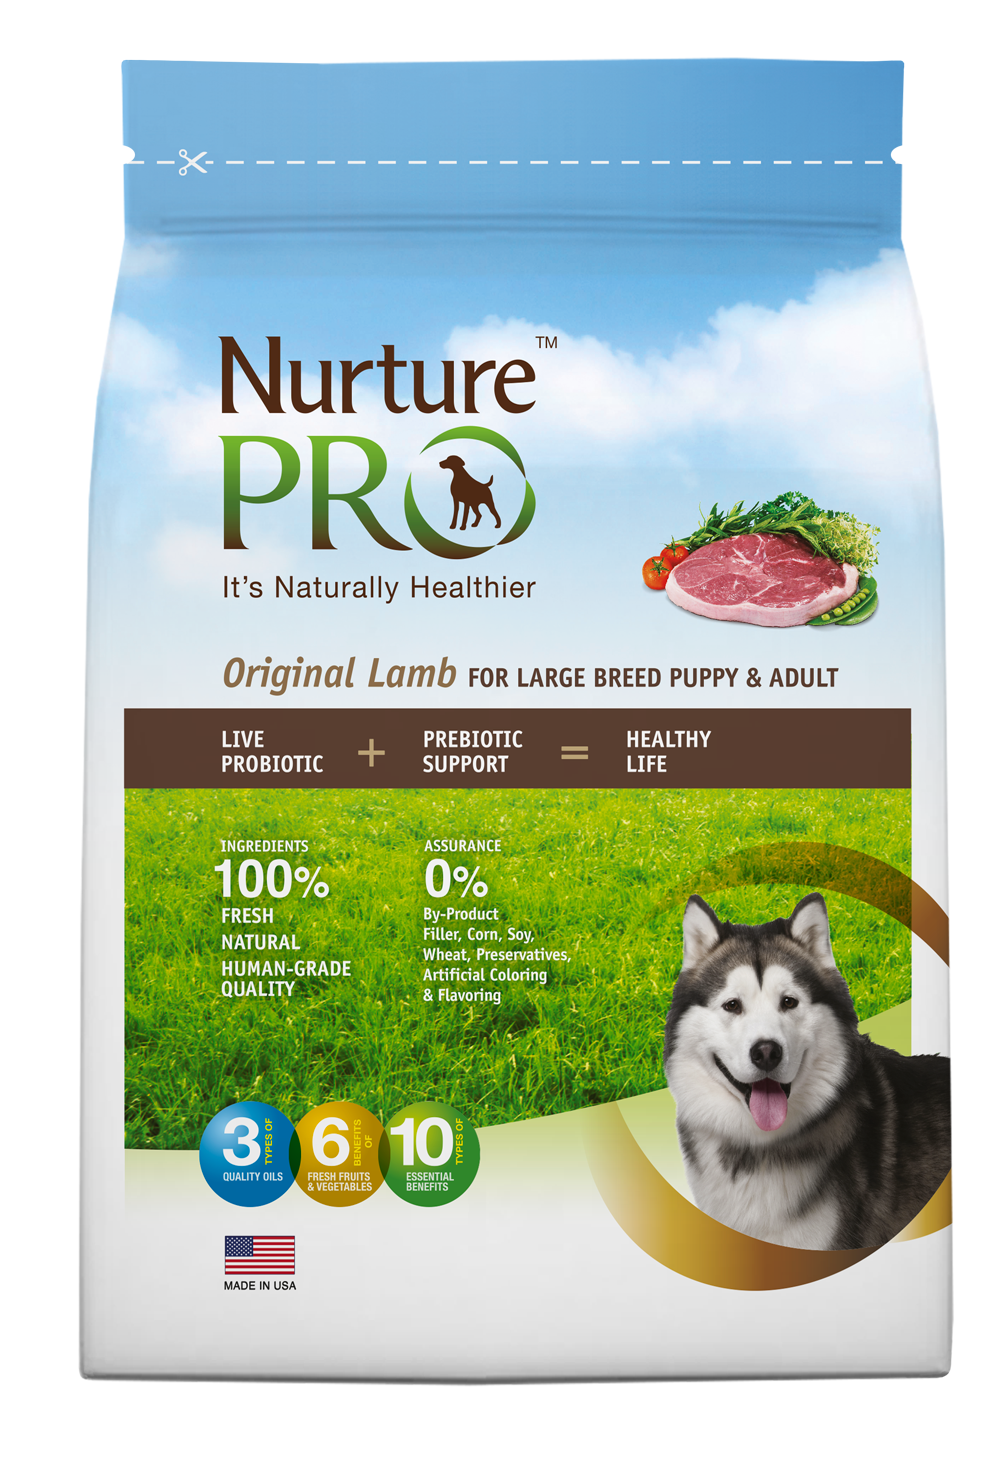 Free Nurture Pro Dog and Cat food sample